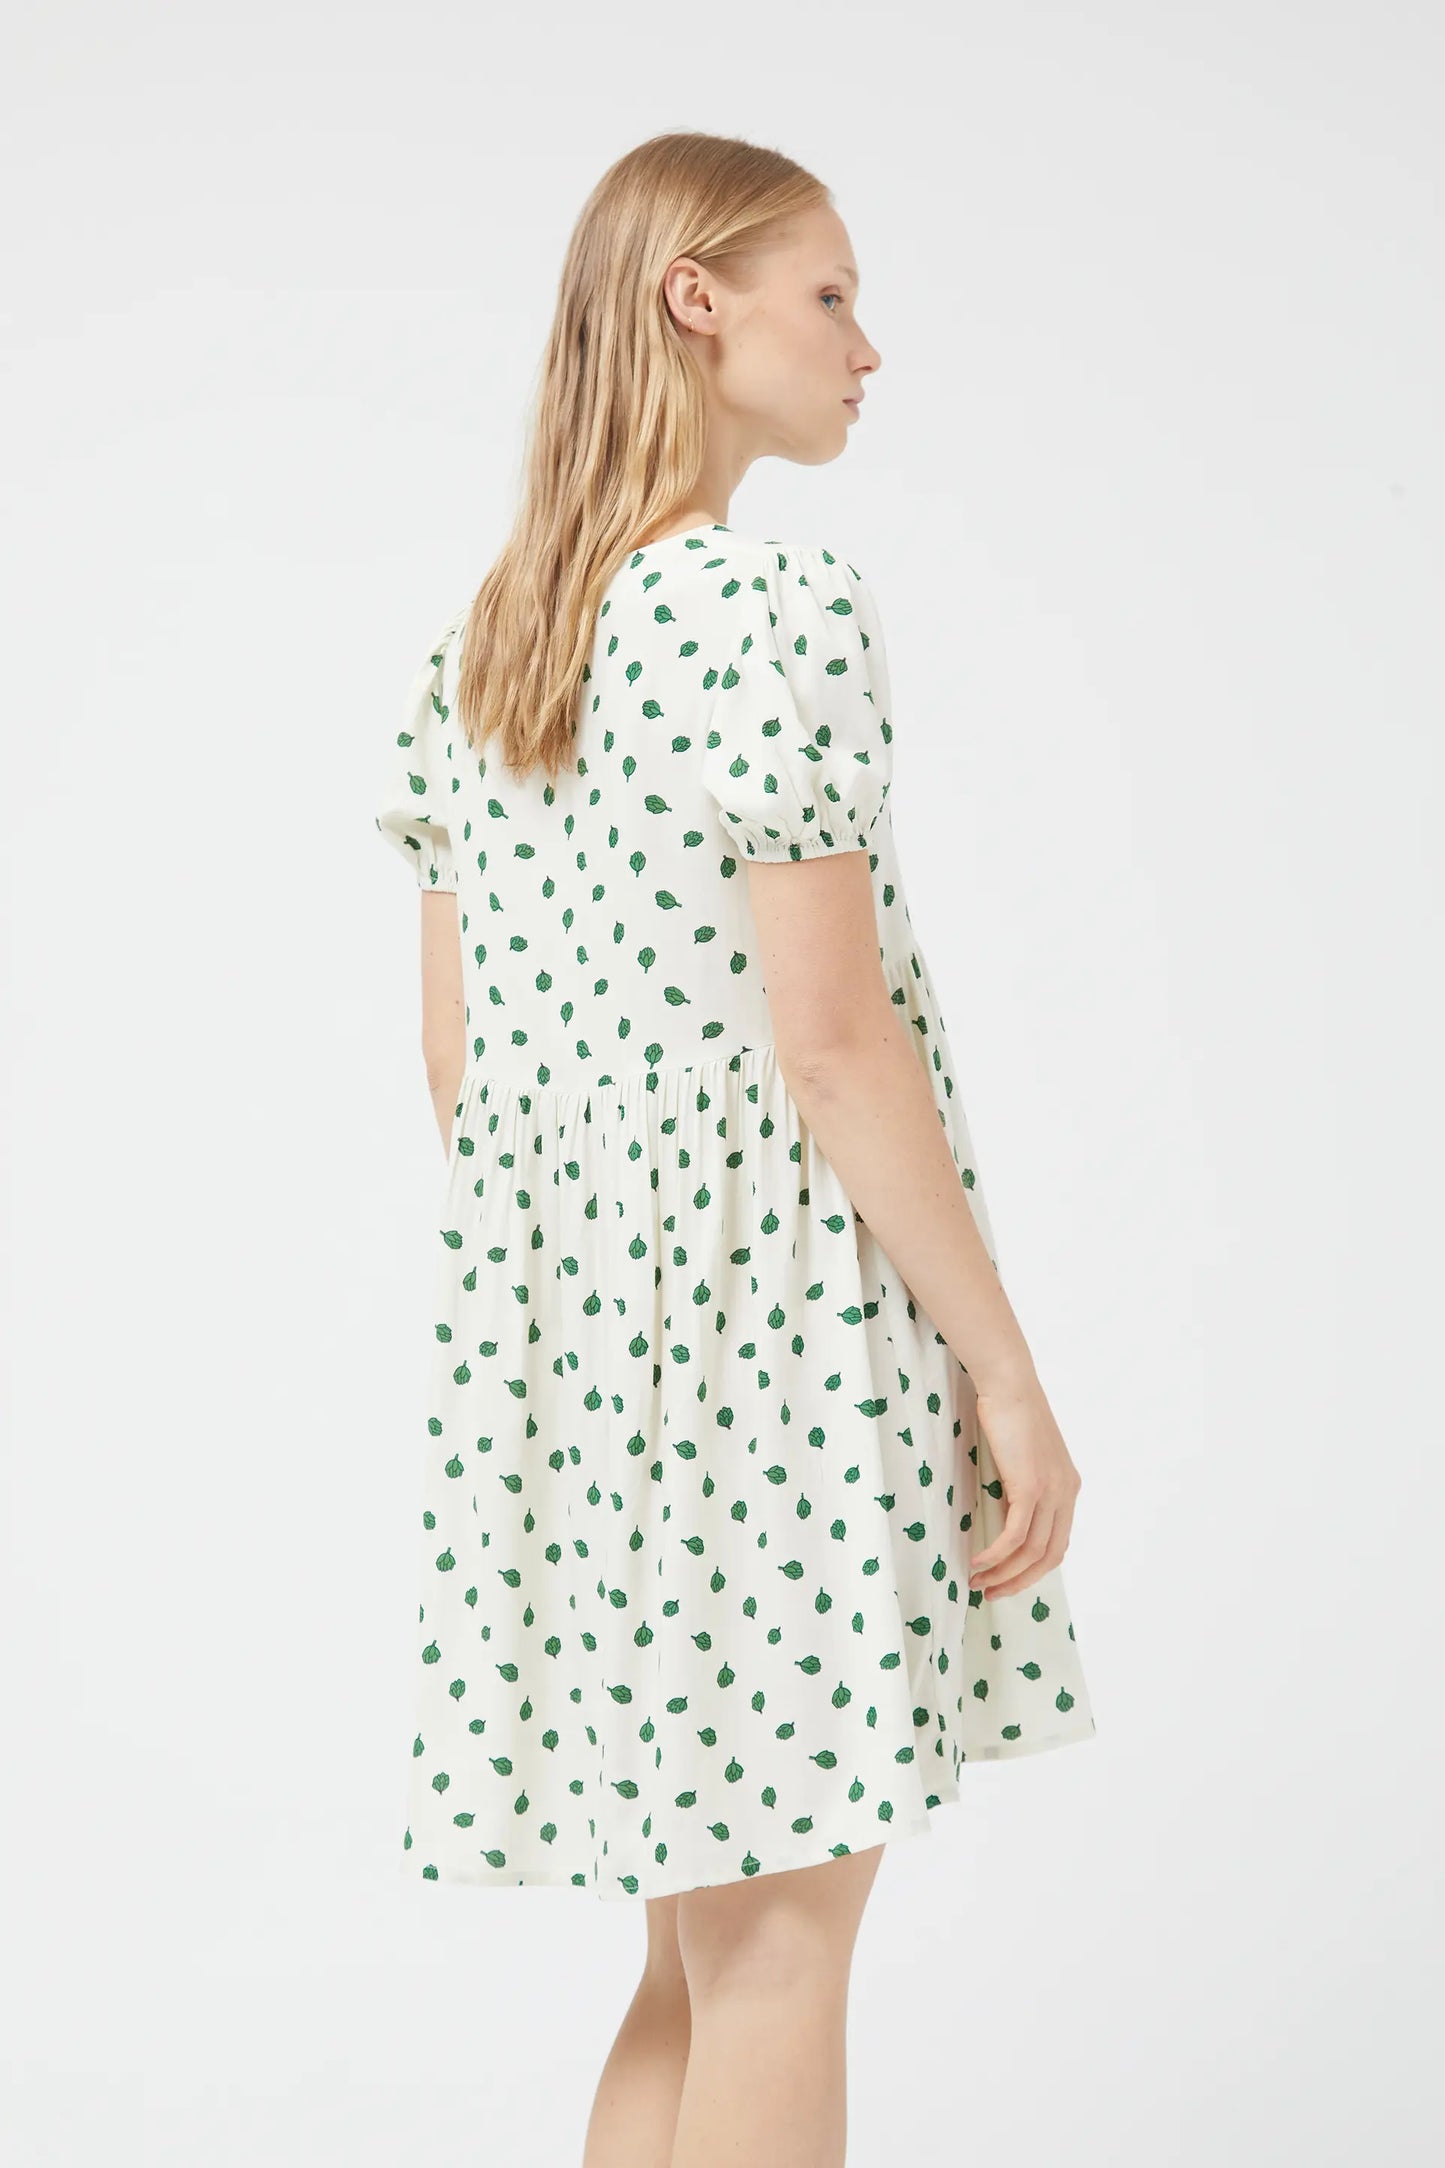 Short artichoke print dress